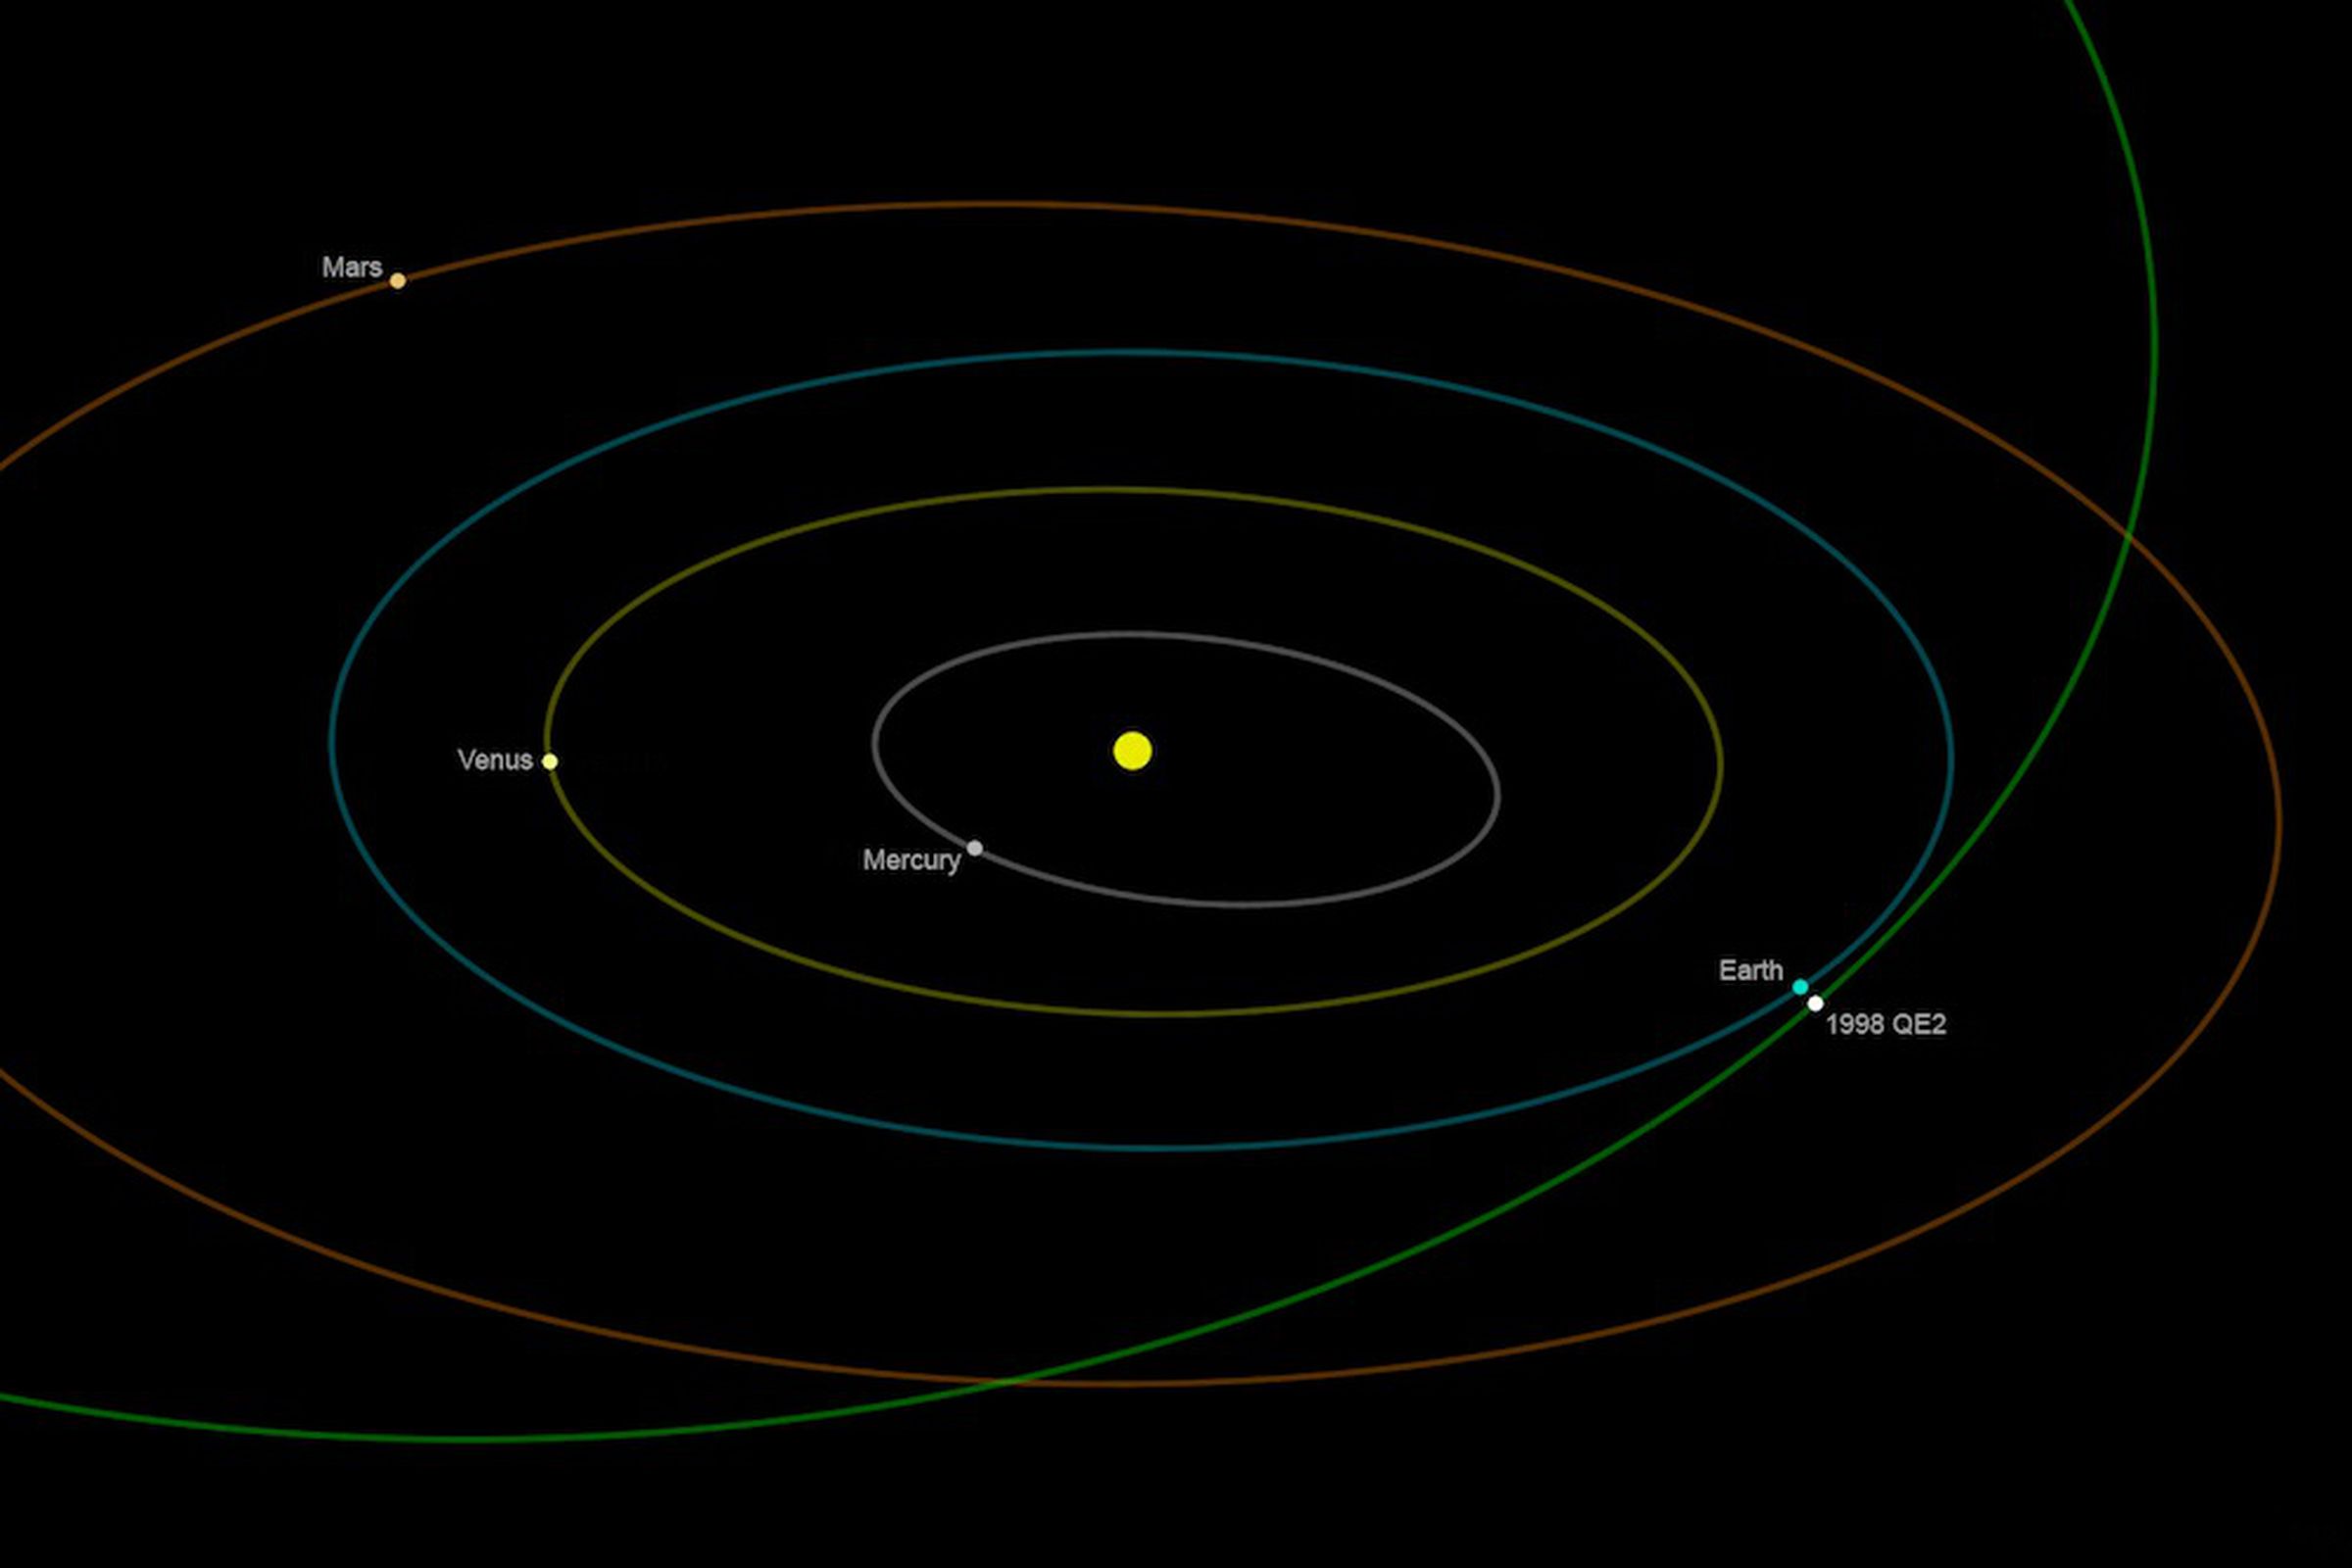 Asteroid 1998 QE2